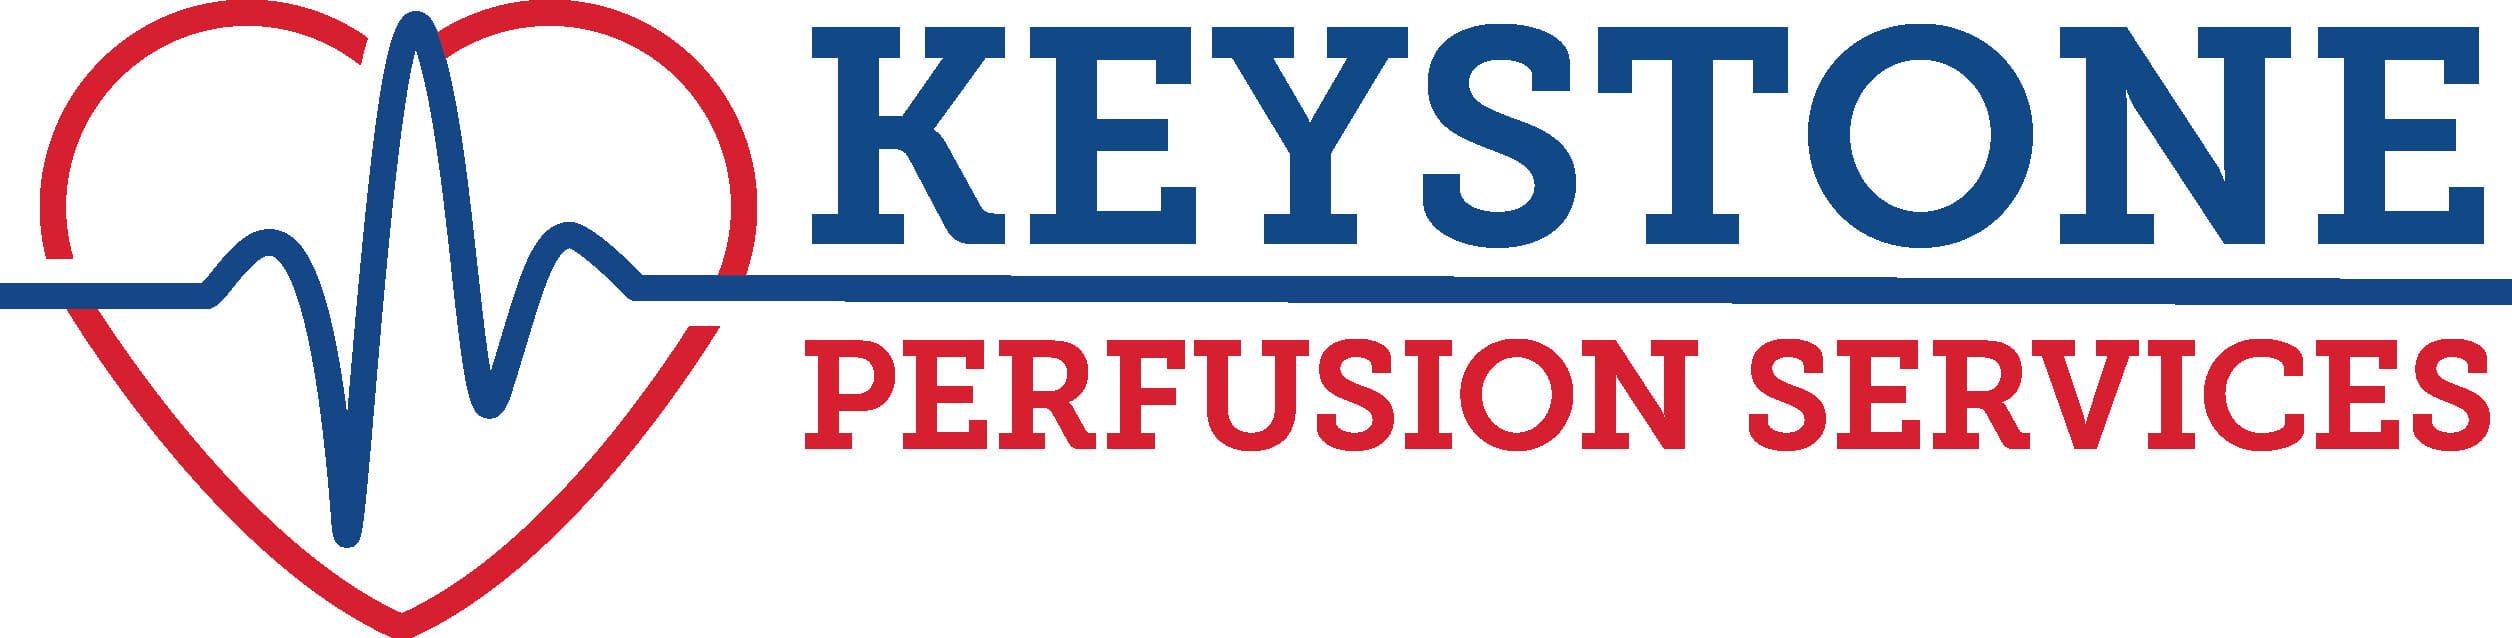 Kaystone logo